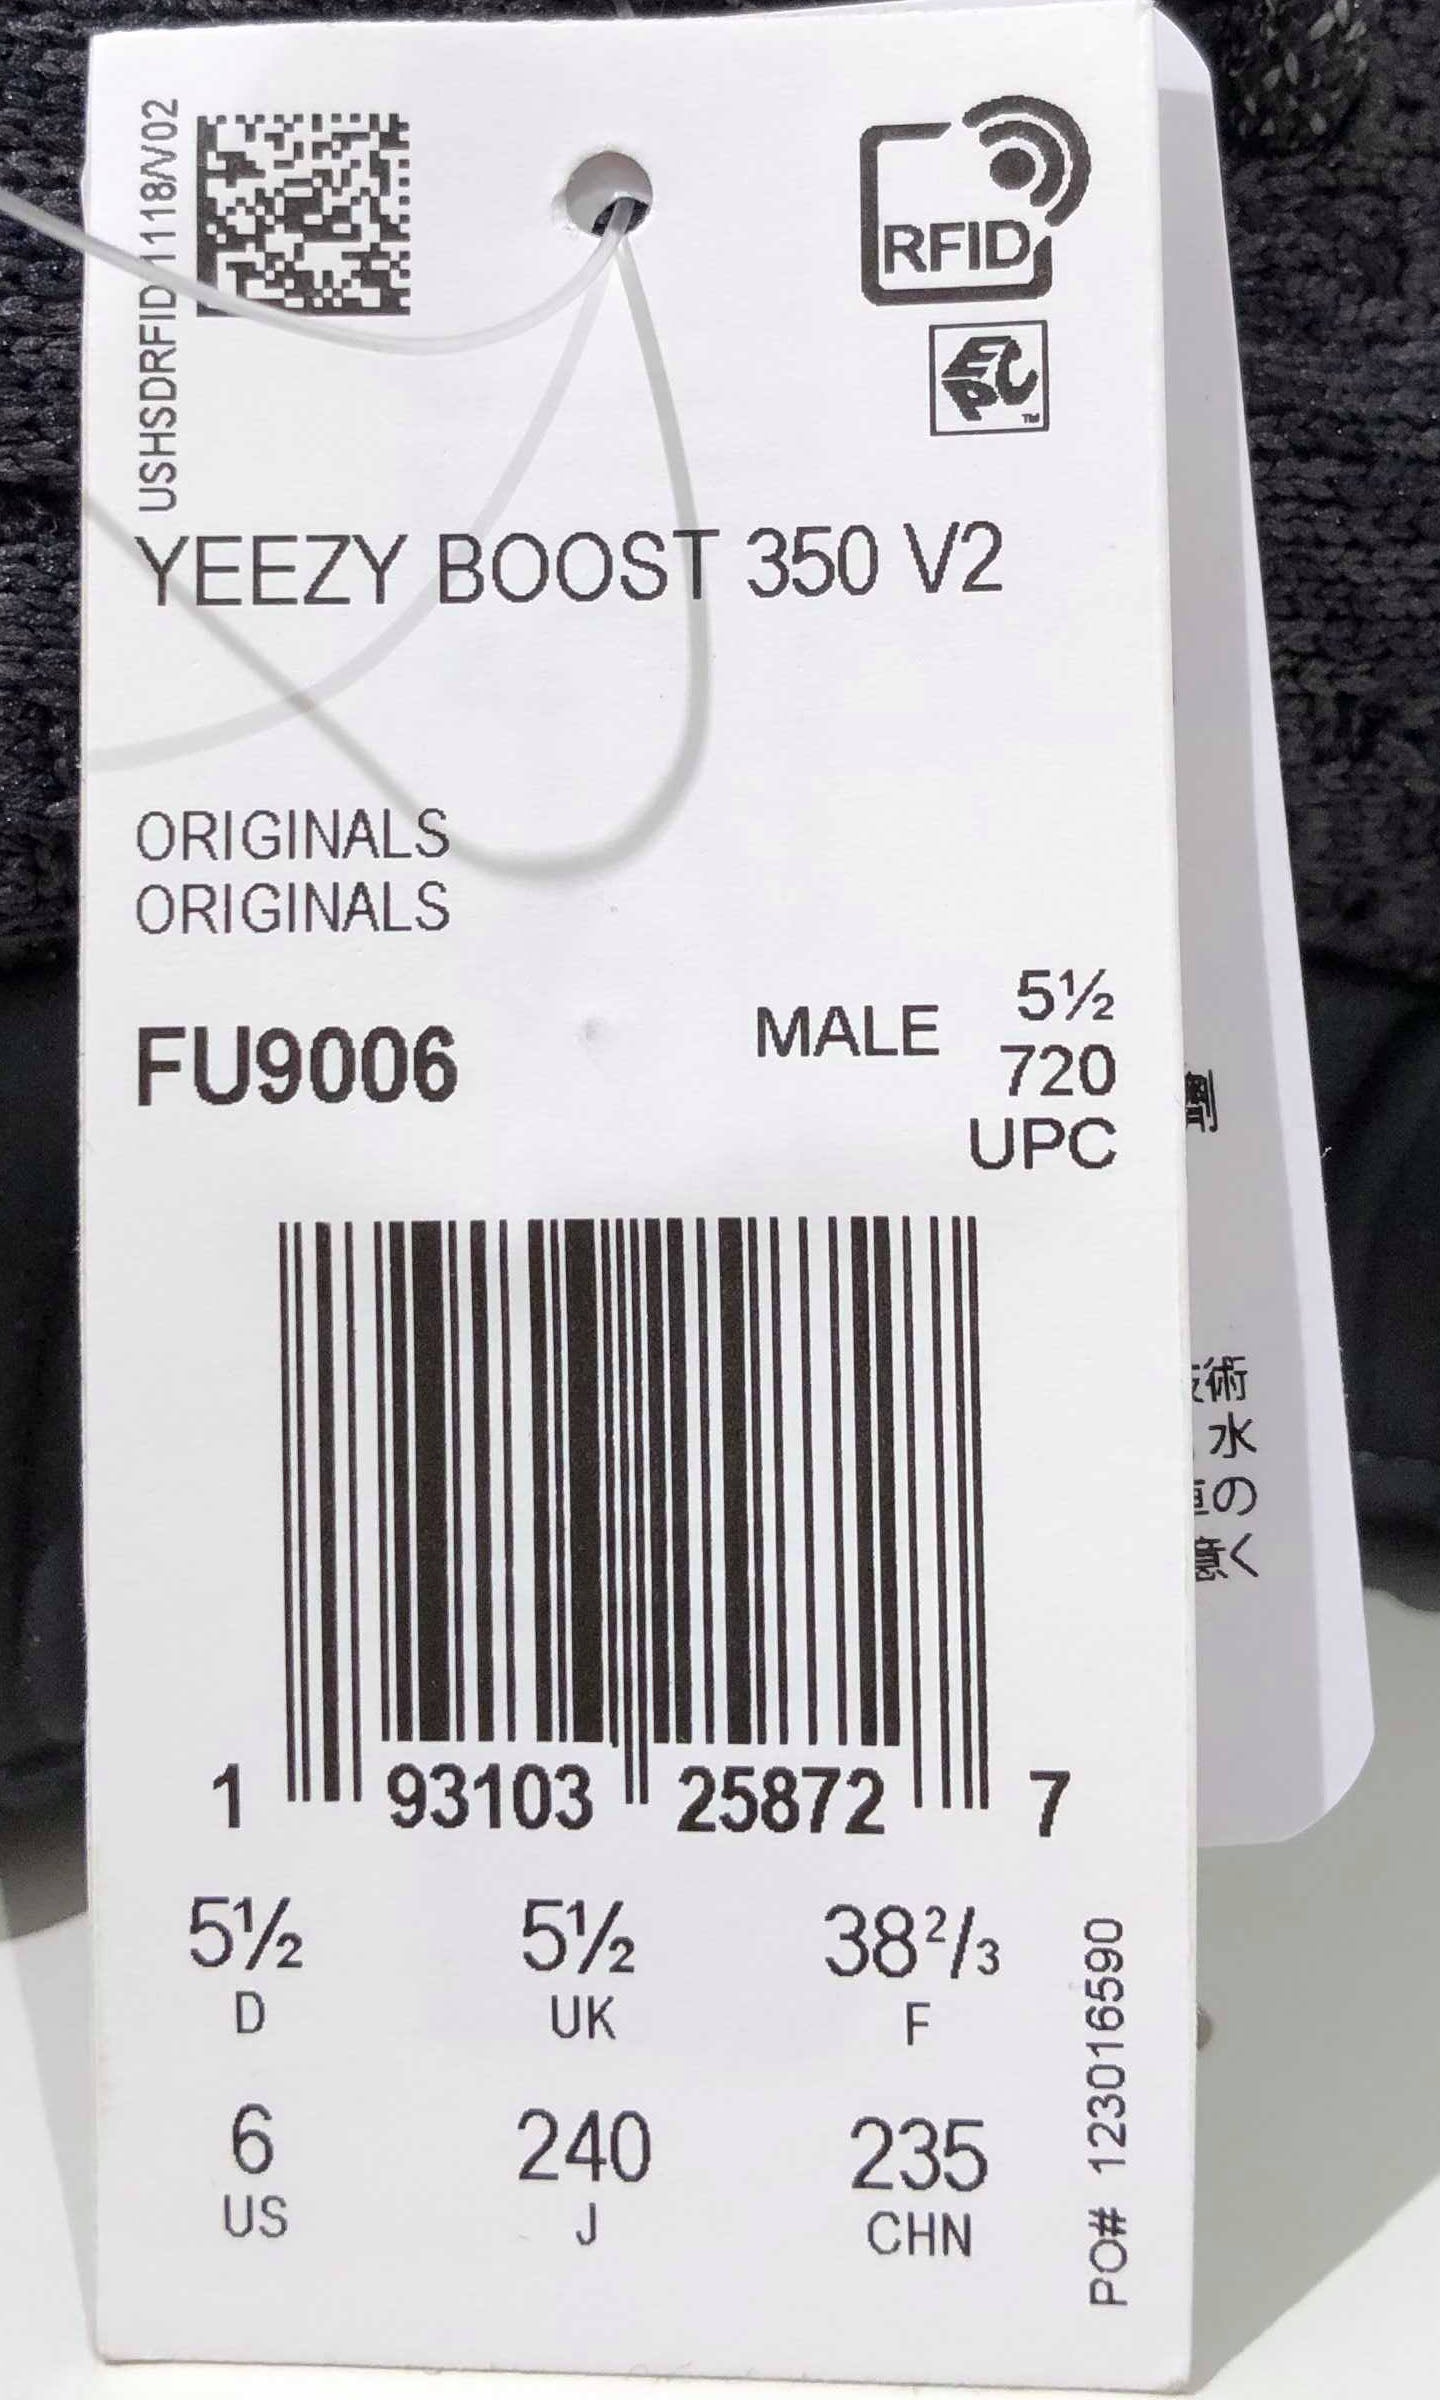 How to legit check v2 Black yeezy 350